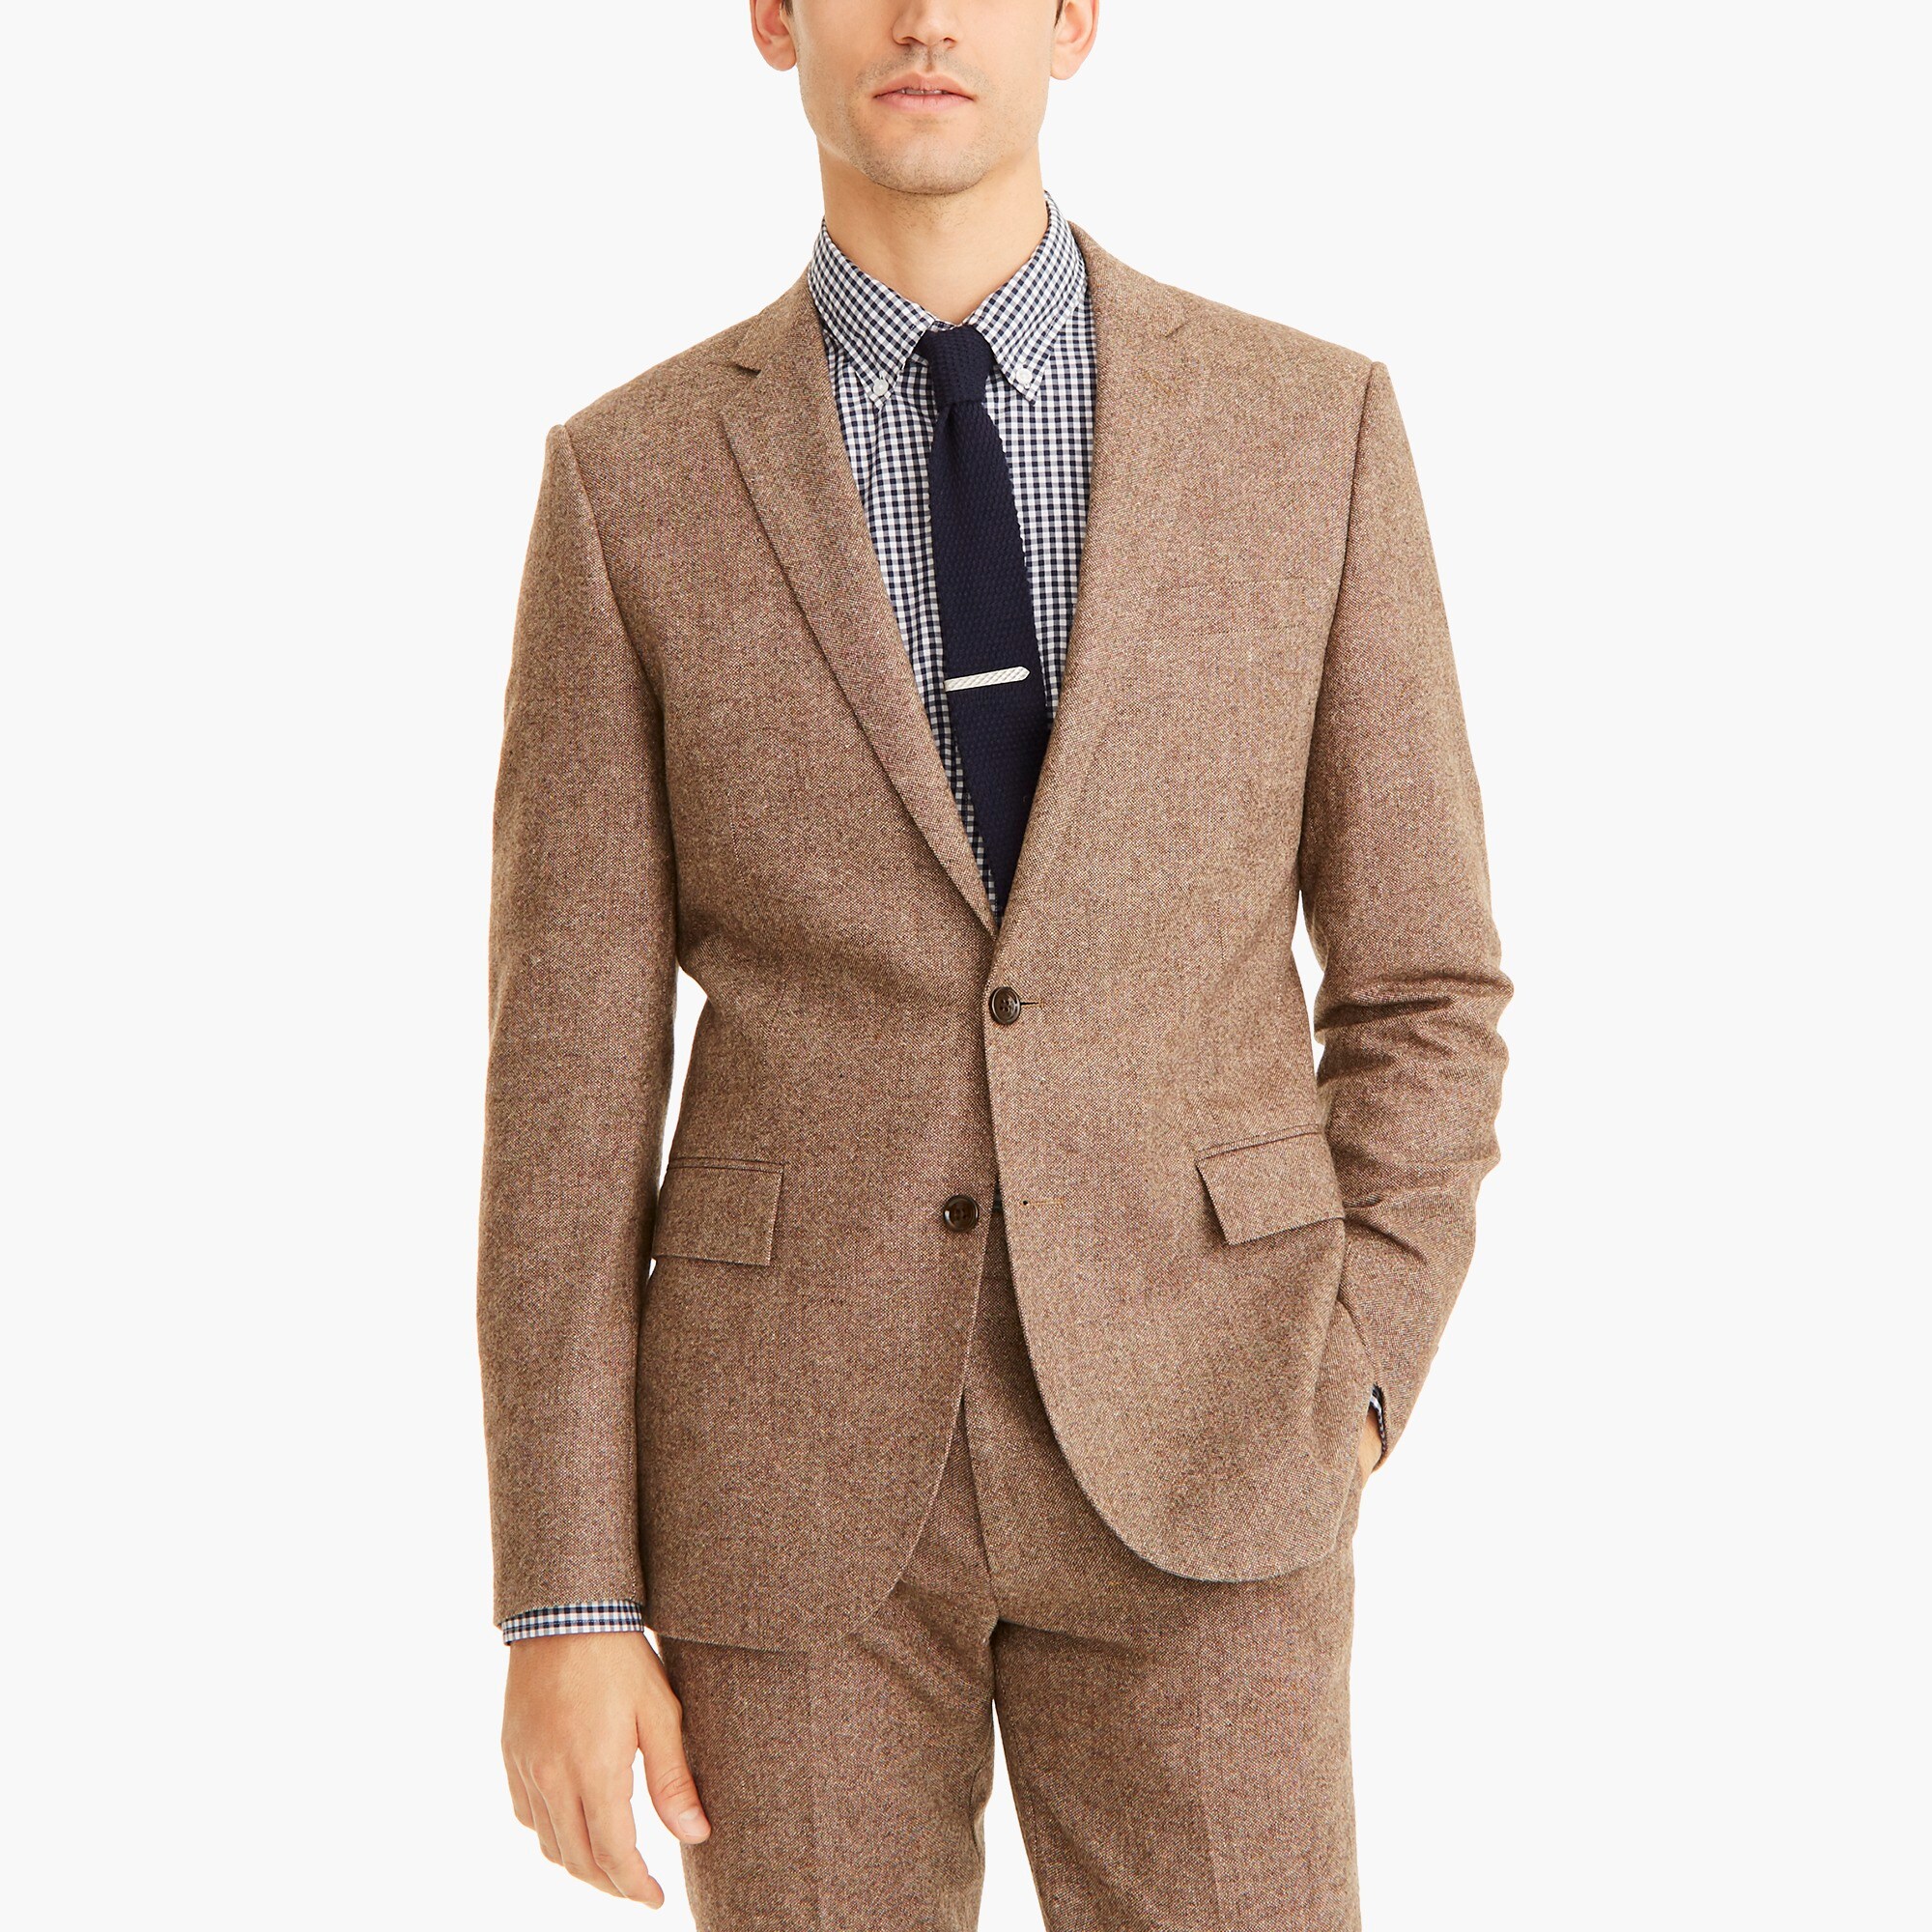 Jcrew Slim-fit Thompson suit jacket in donegal wool blend